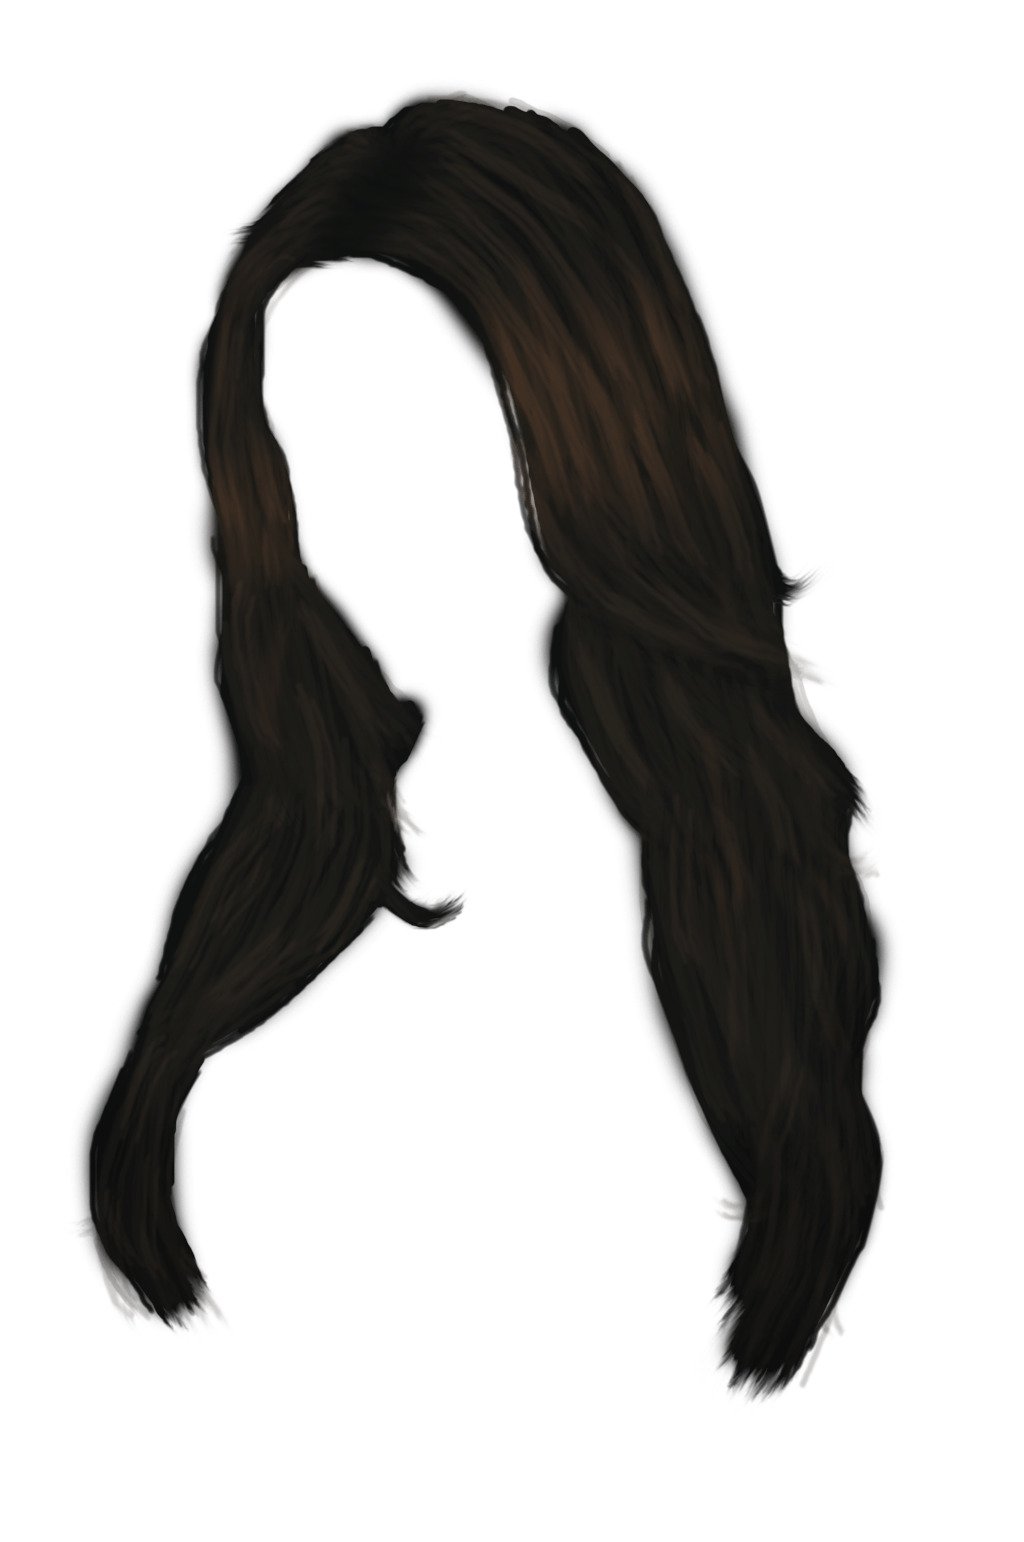 Long Black Women Hair png icons